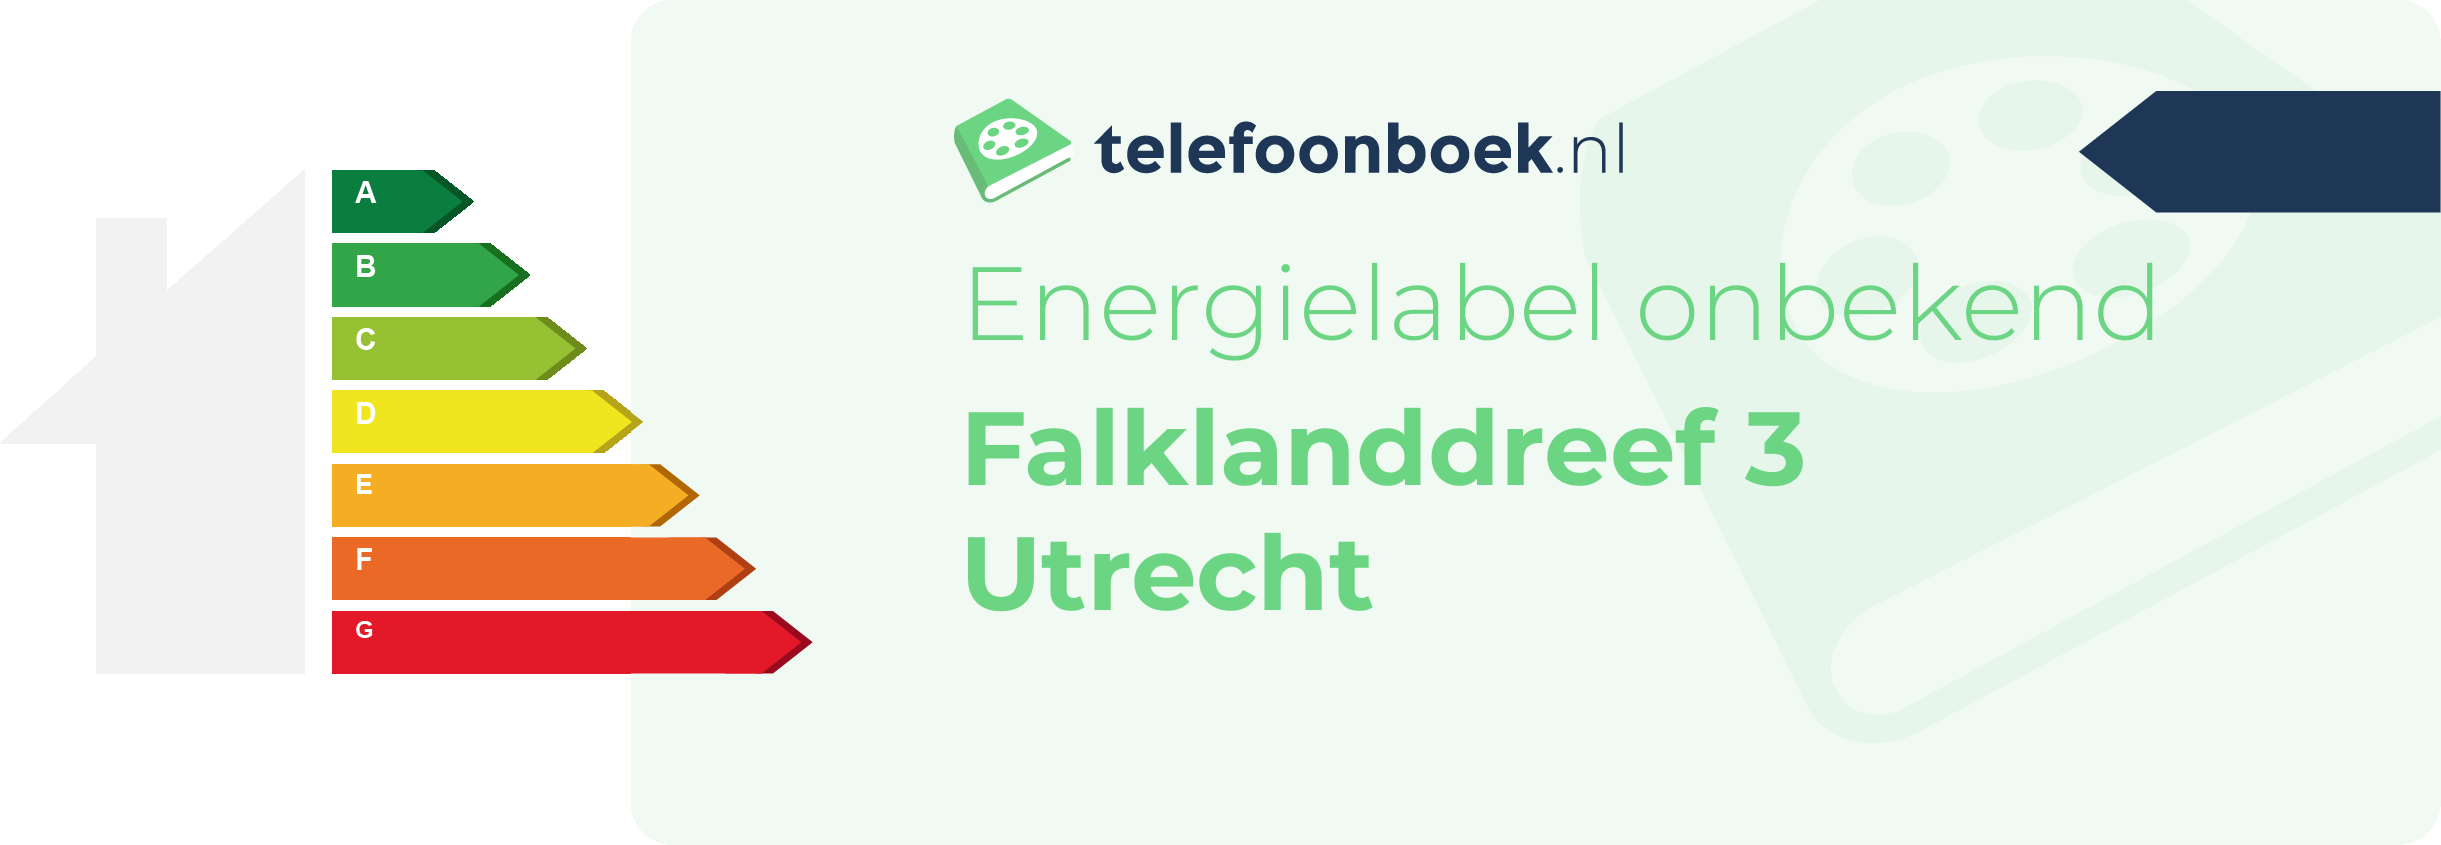 Energielabel Falklanddreef 3 Utrecht